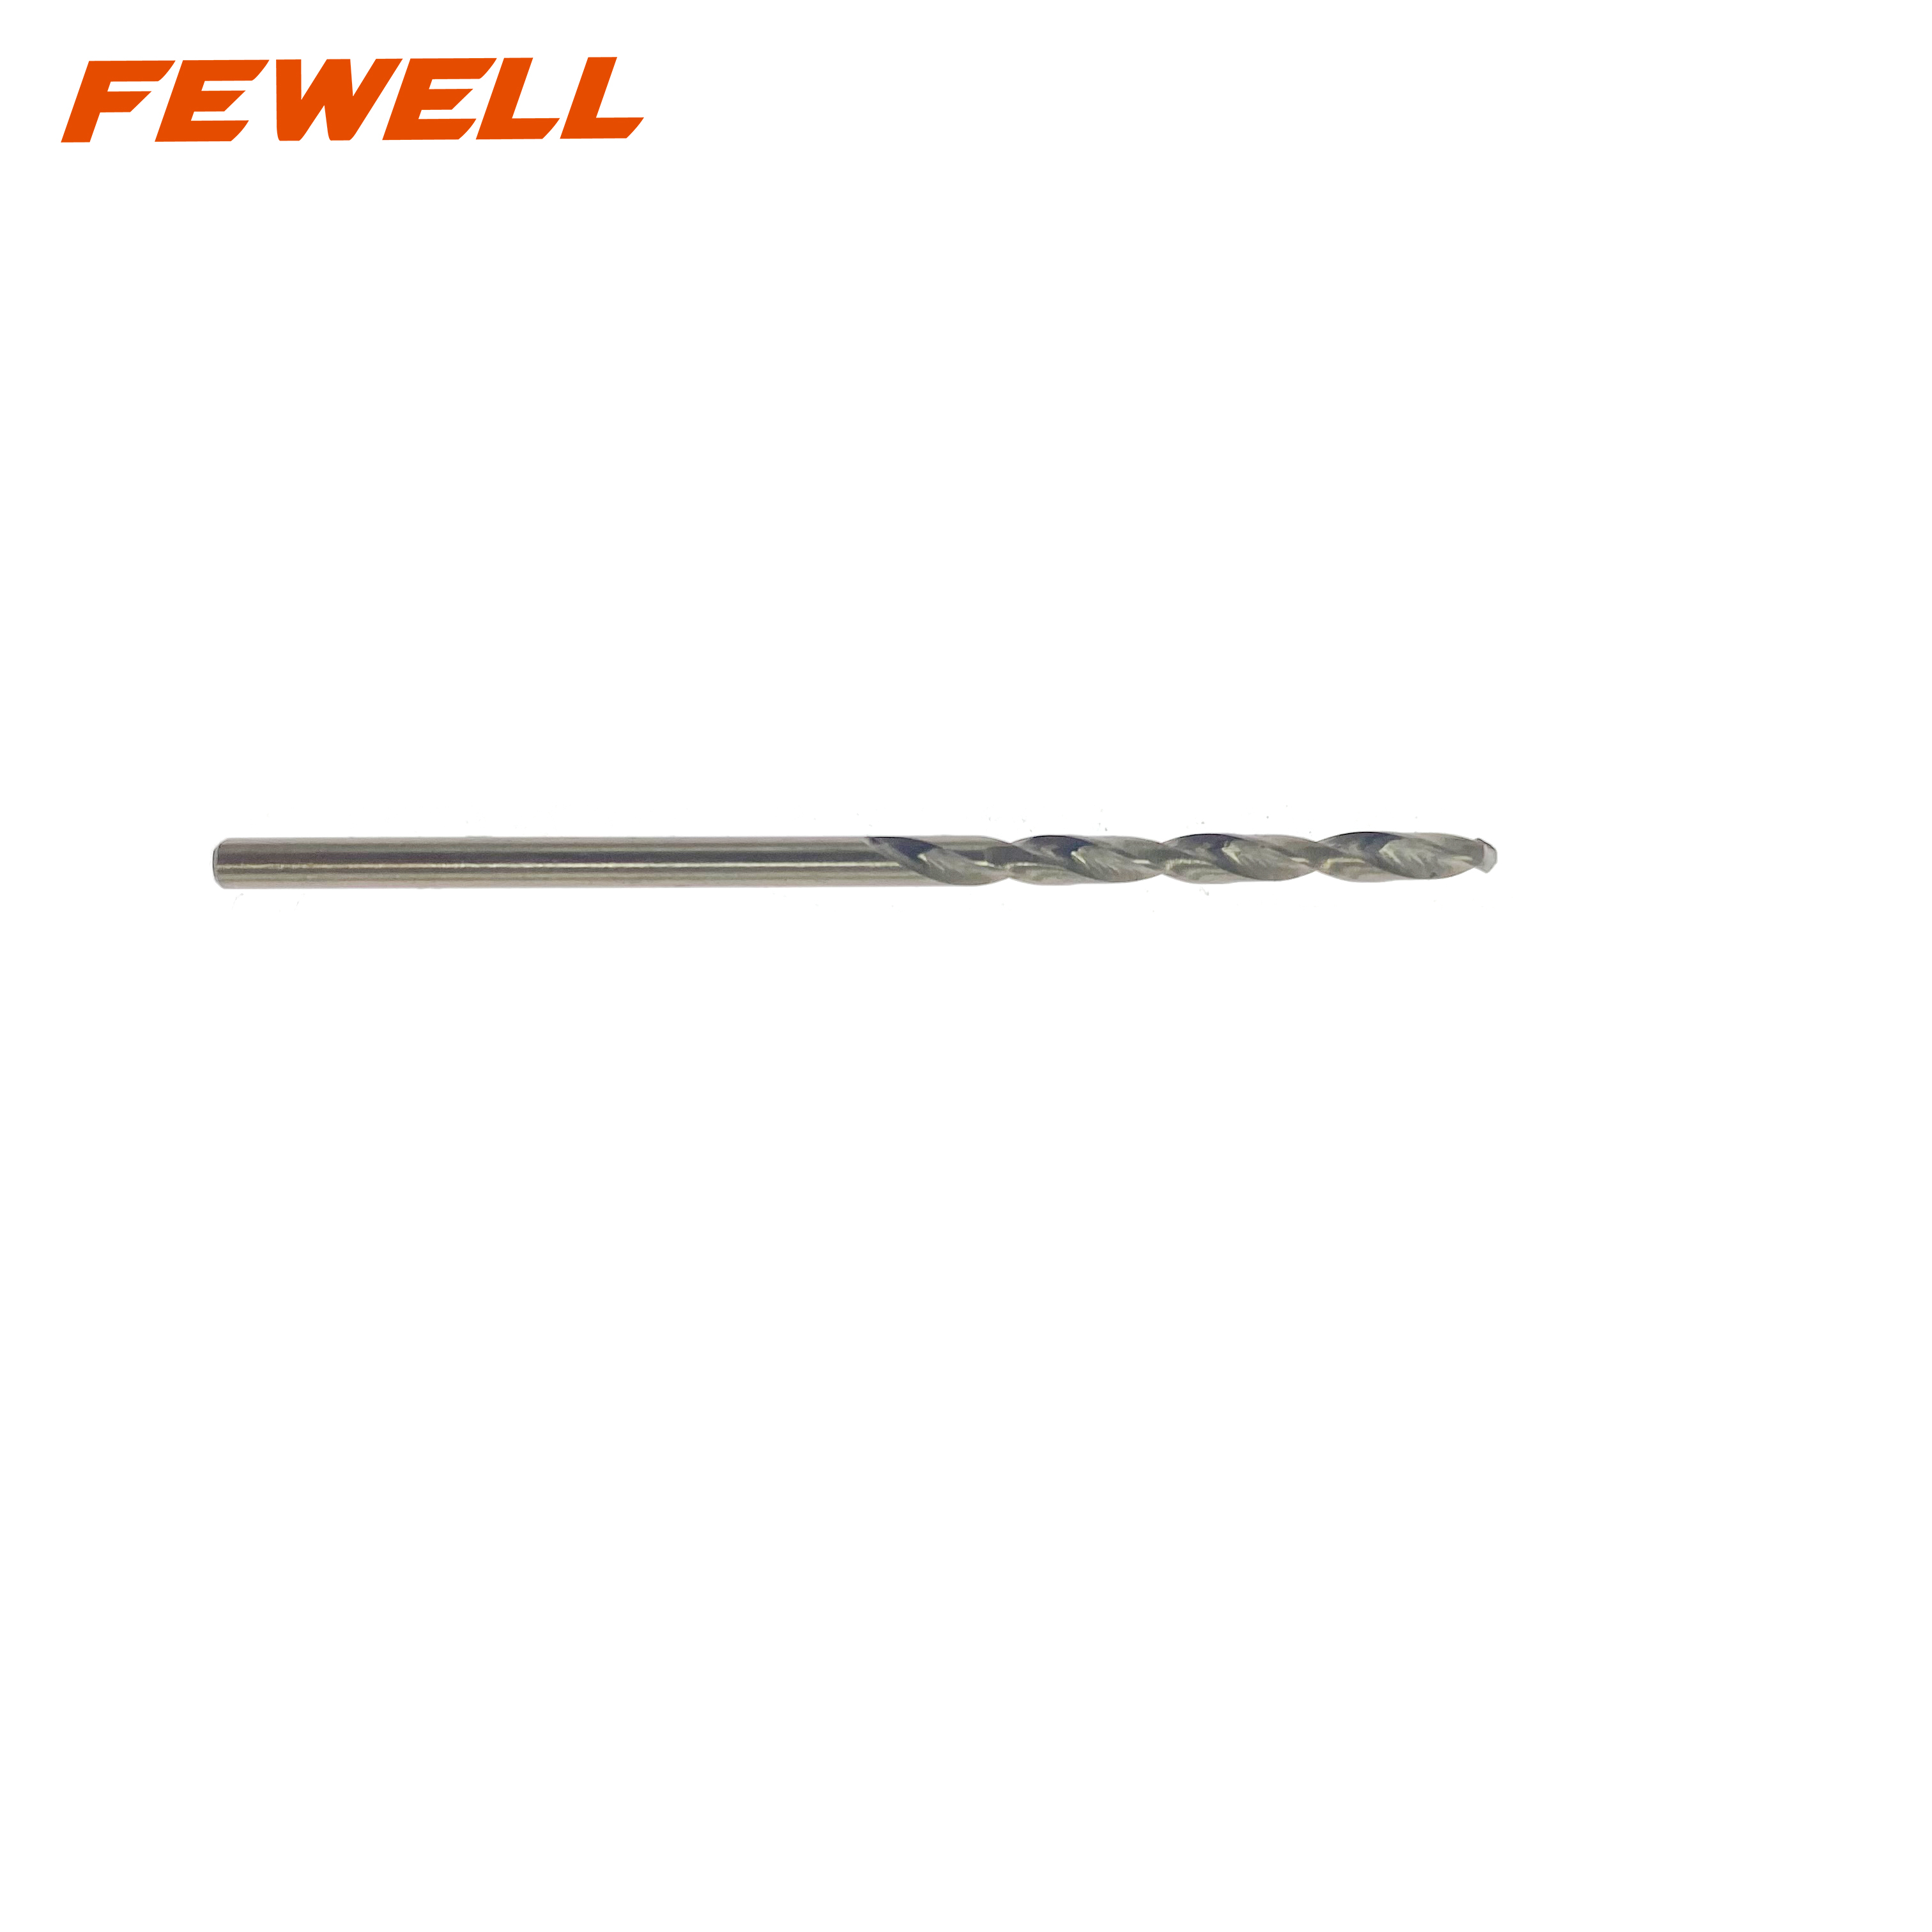 High quality M2 6542 HSS high speed steel twist drill bits 2-16mm for drilling metal iron aluminum